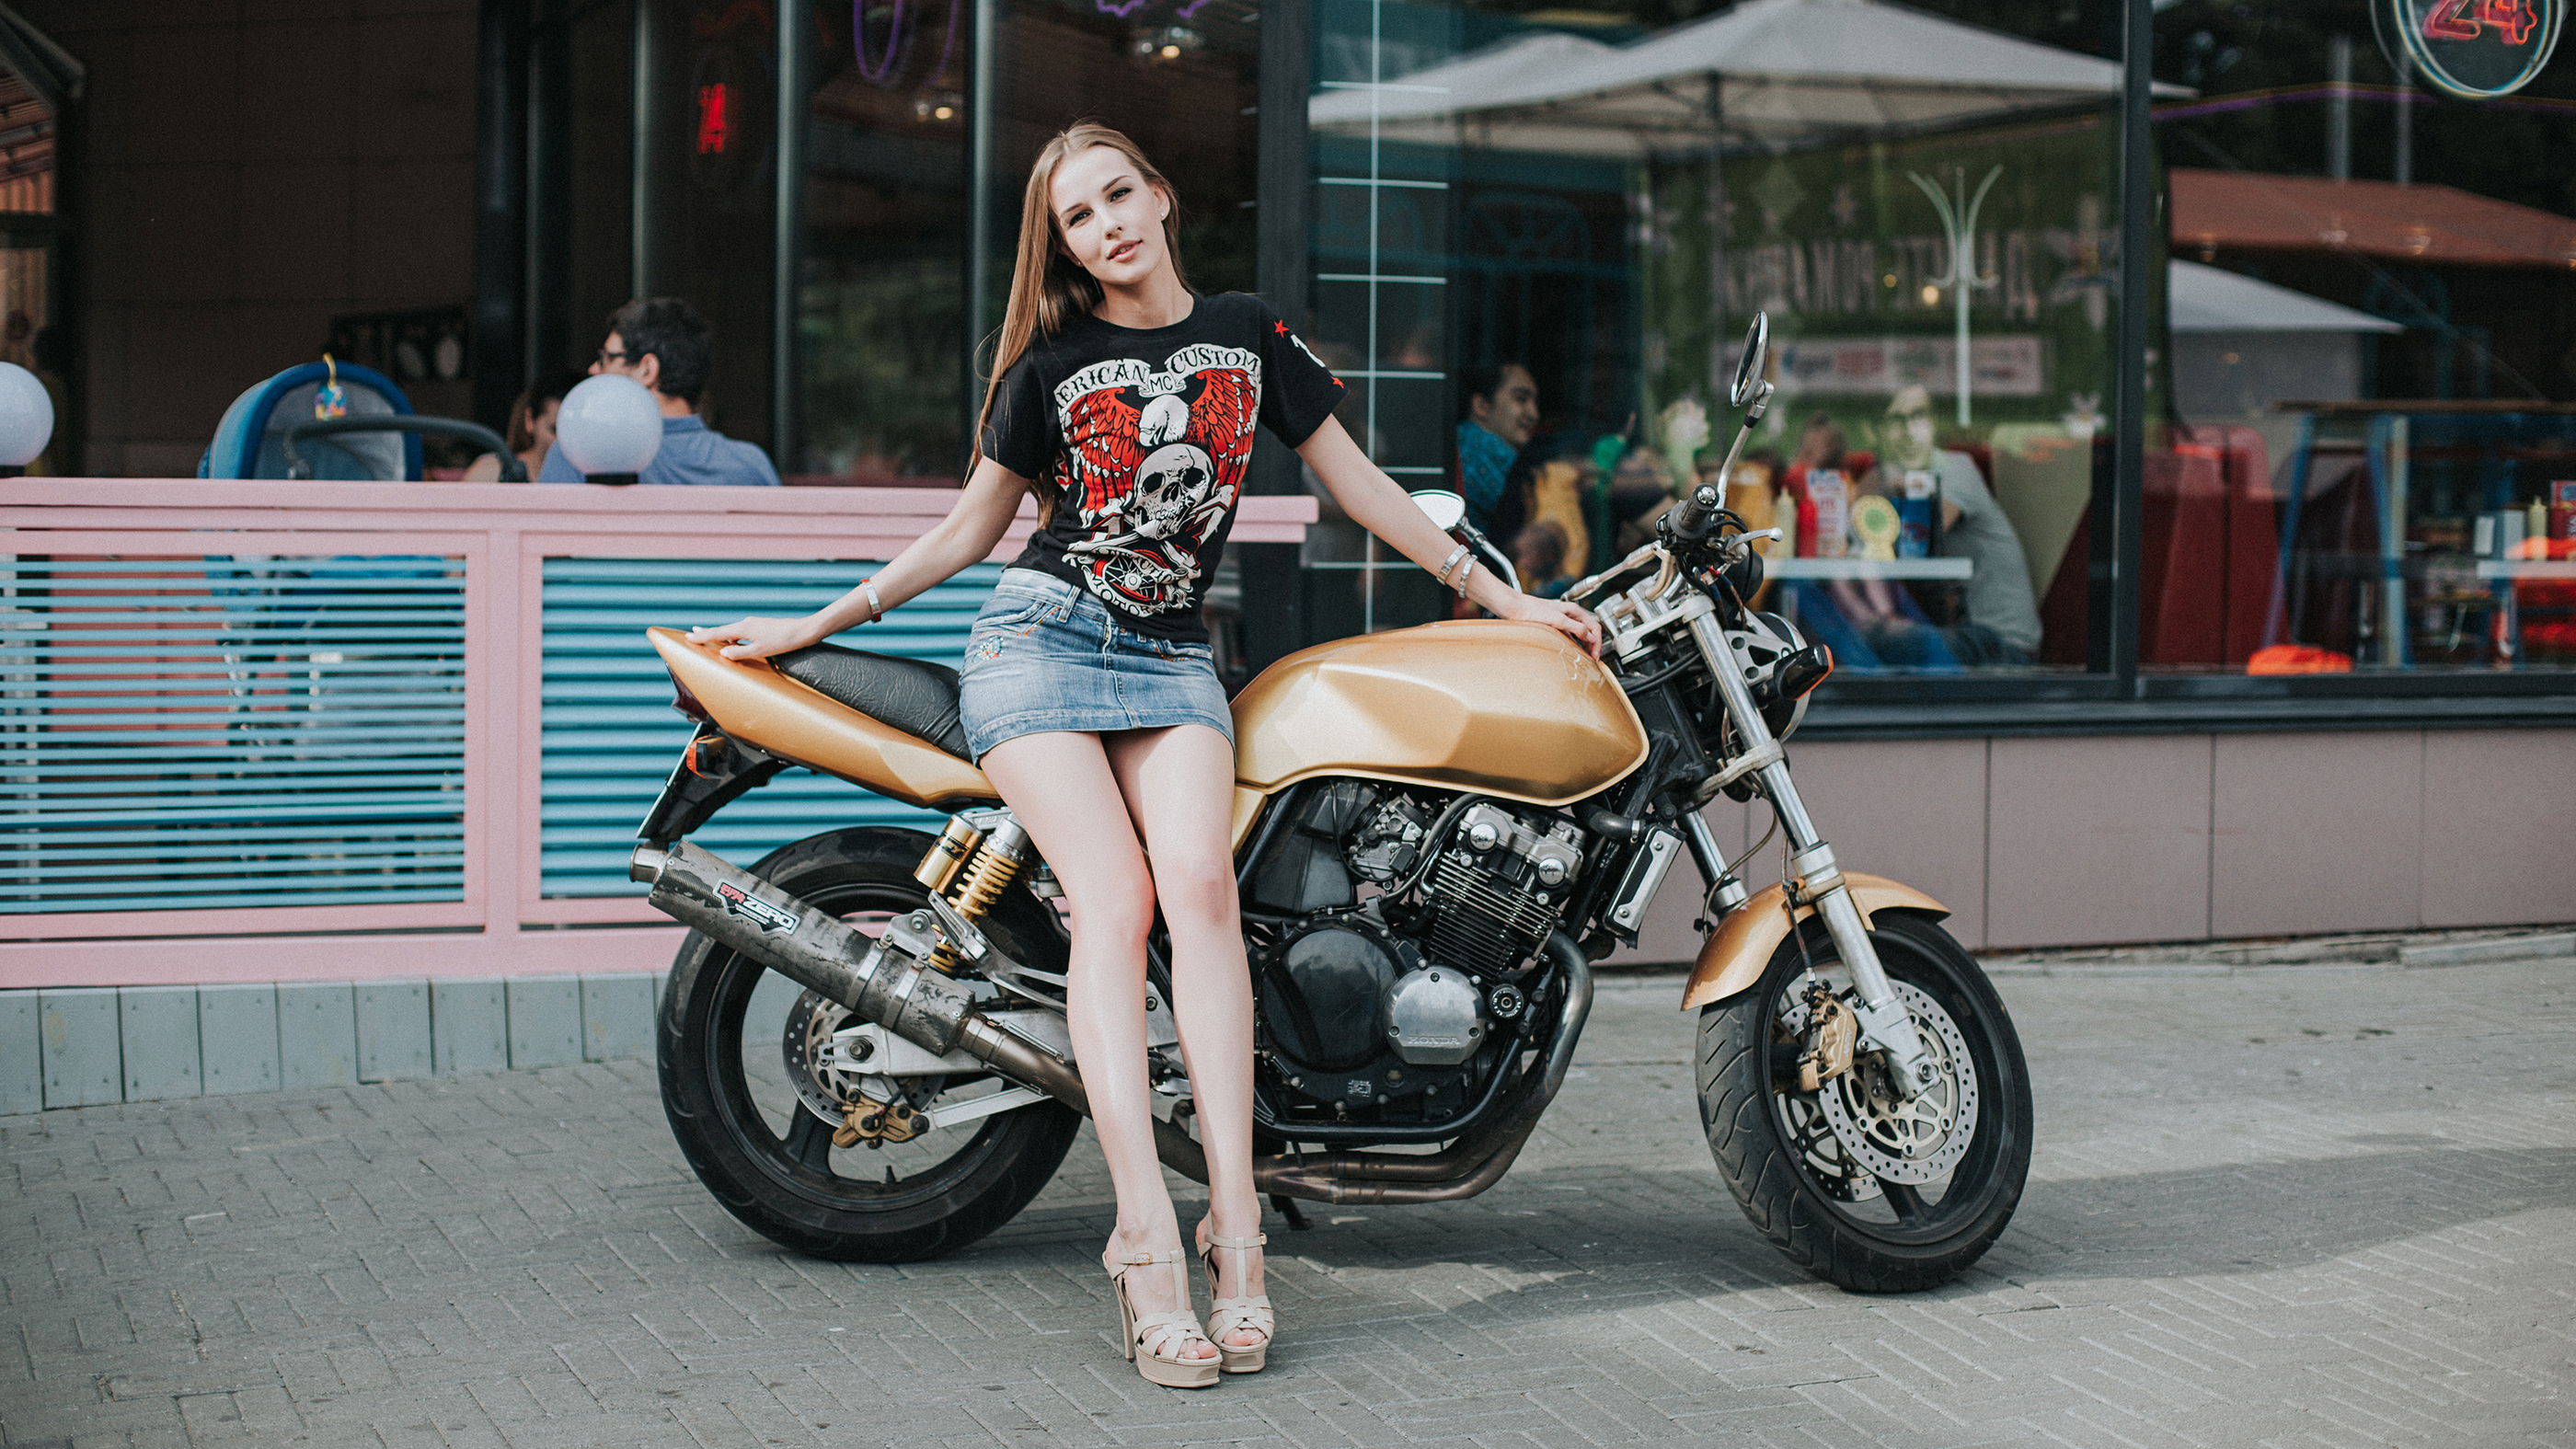 Women Anton Harisov Fotoshi Toshi Motorcycle Skirt T Shirt High Heels Women Outdoors Brunette Denim  2800x1575